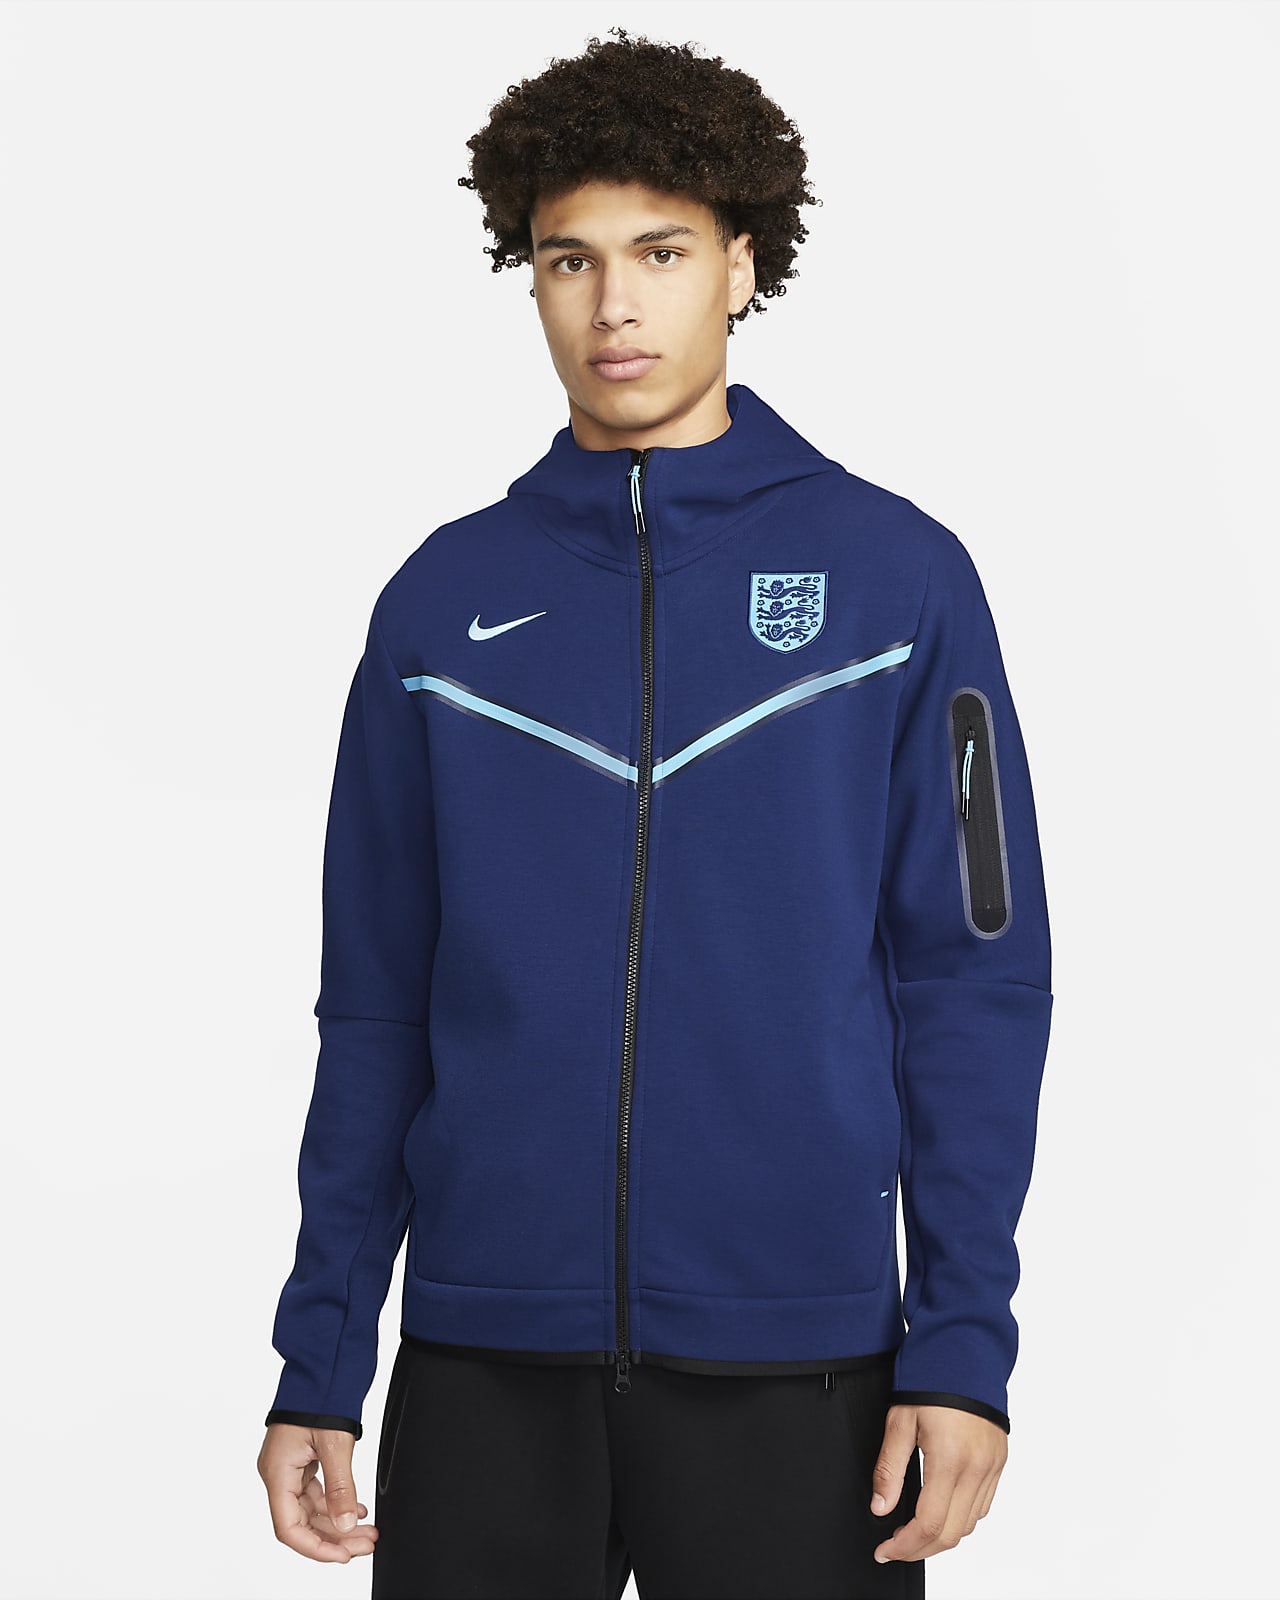 recruit Beyond that's all England Men's Nike Full-Zip Tech Fleece Hoodie. Nike GB